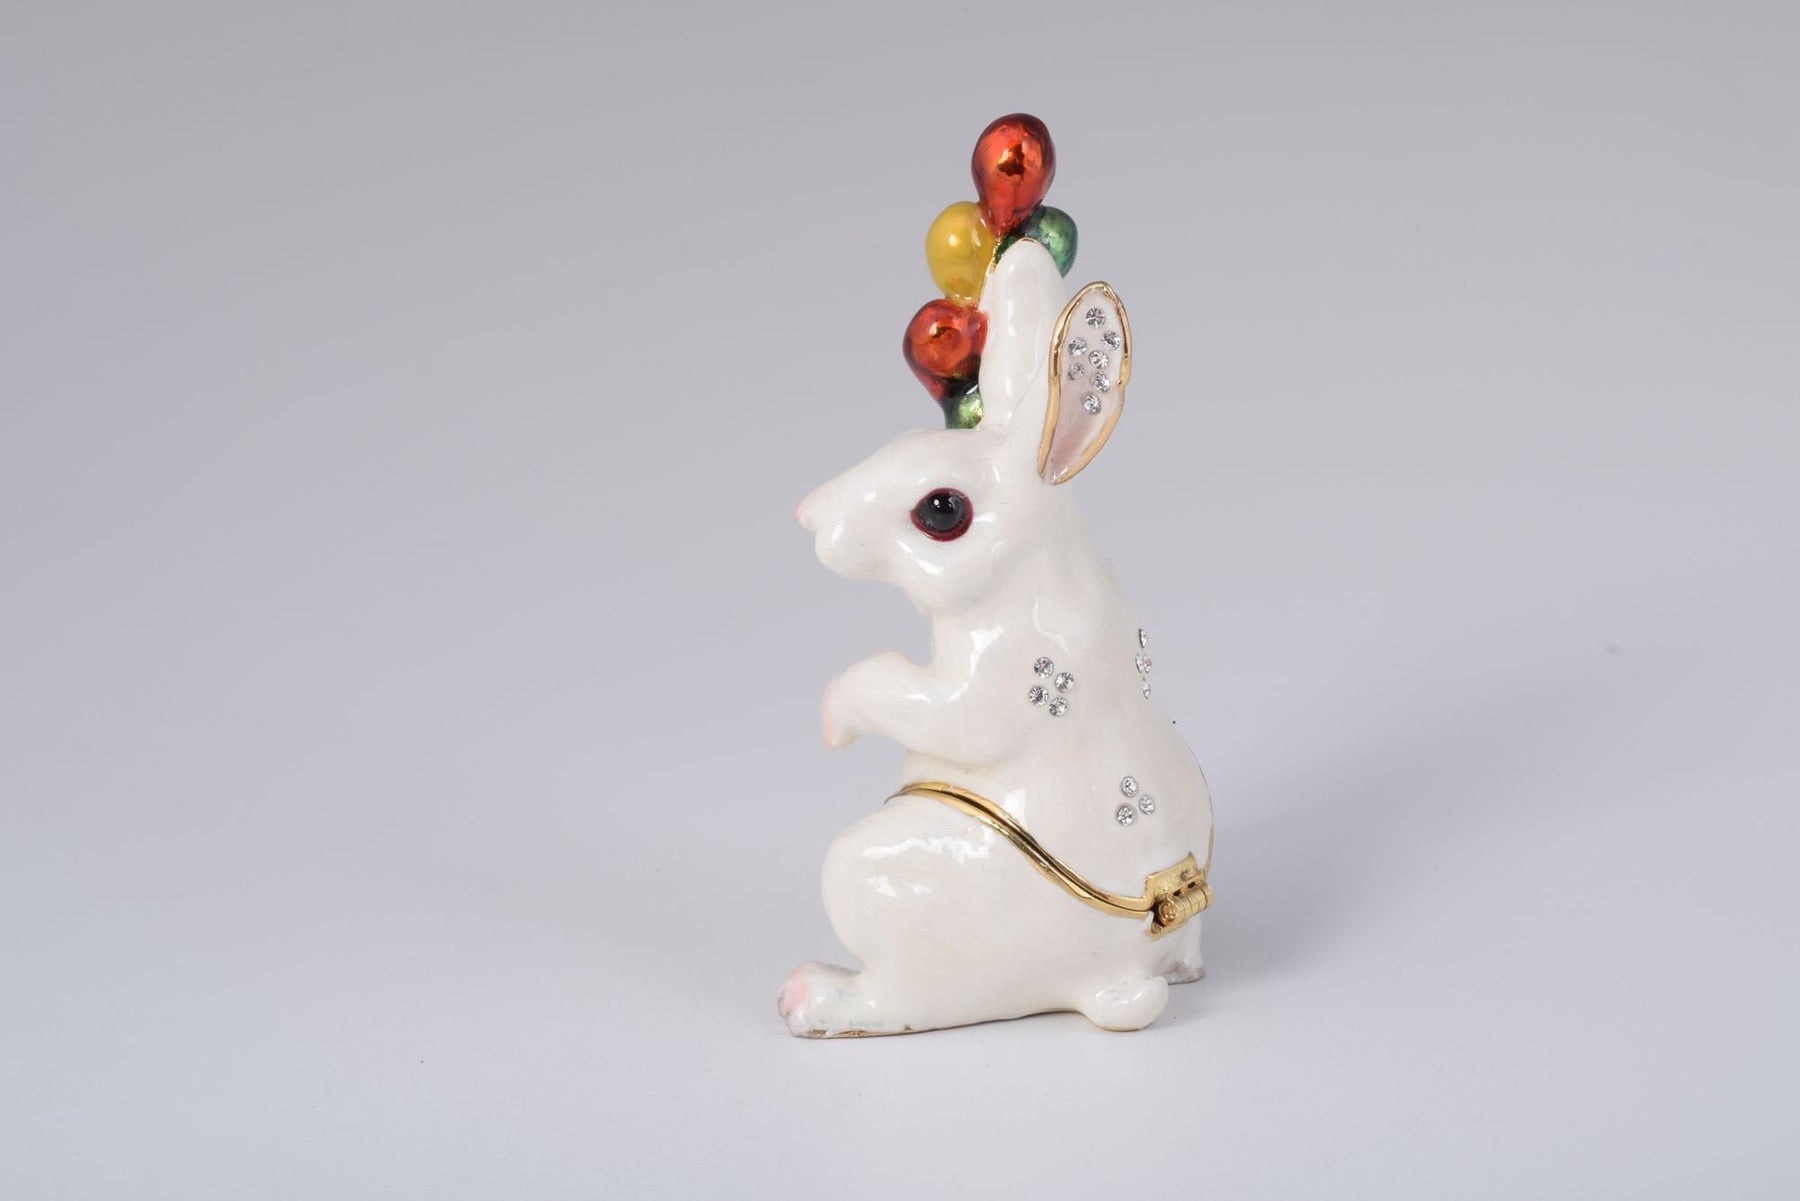 Keren Kopal White Rabbit with Colorful Baloons  66.25